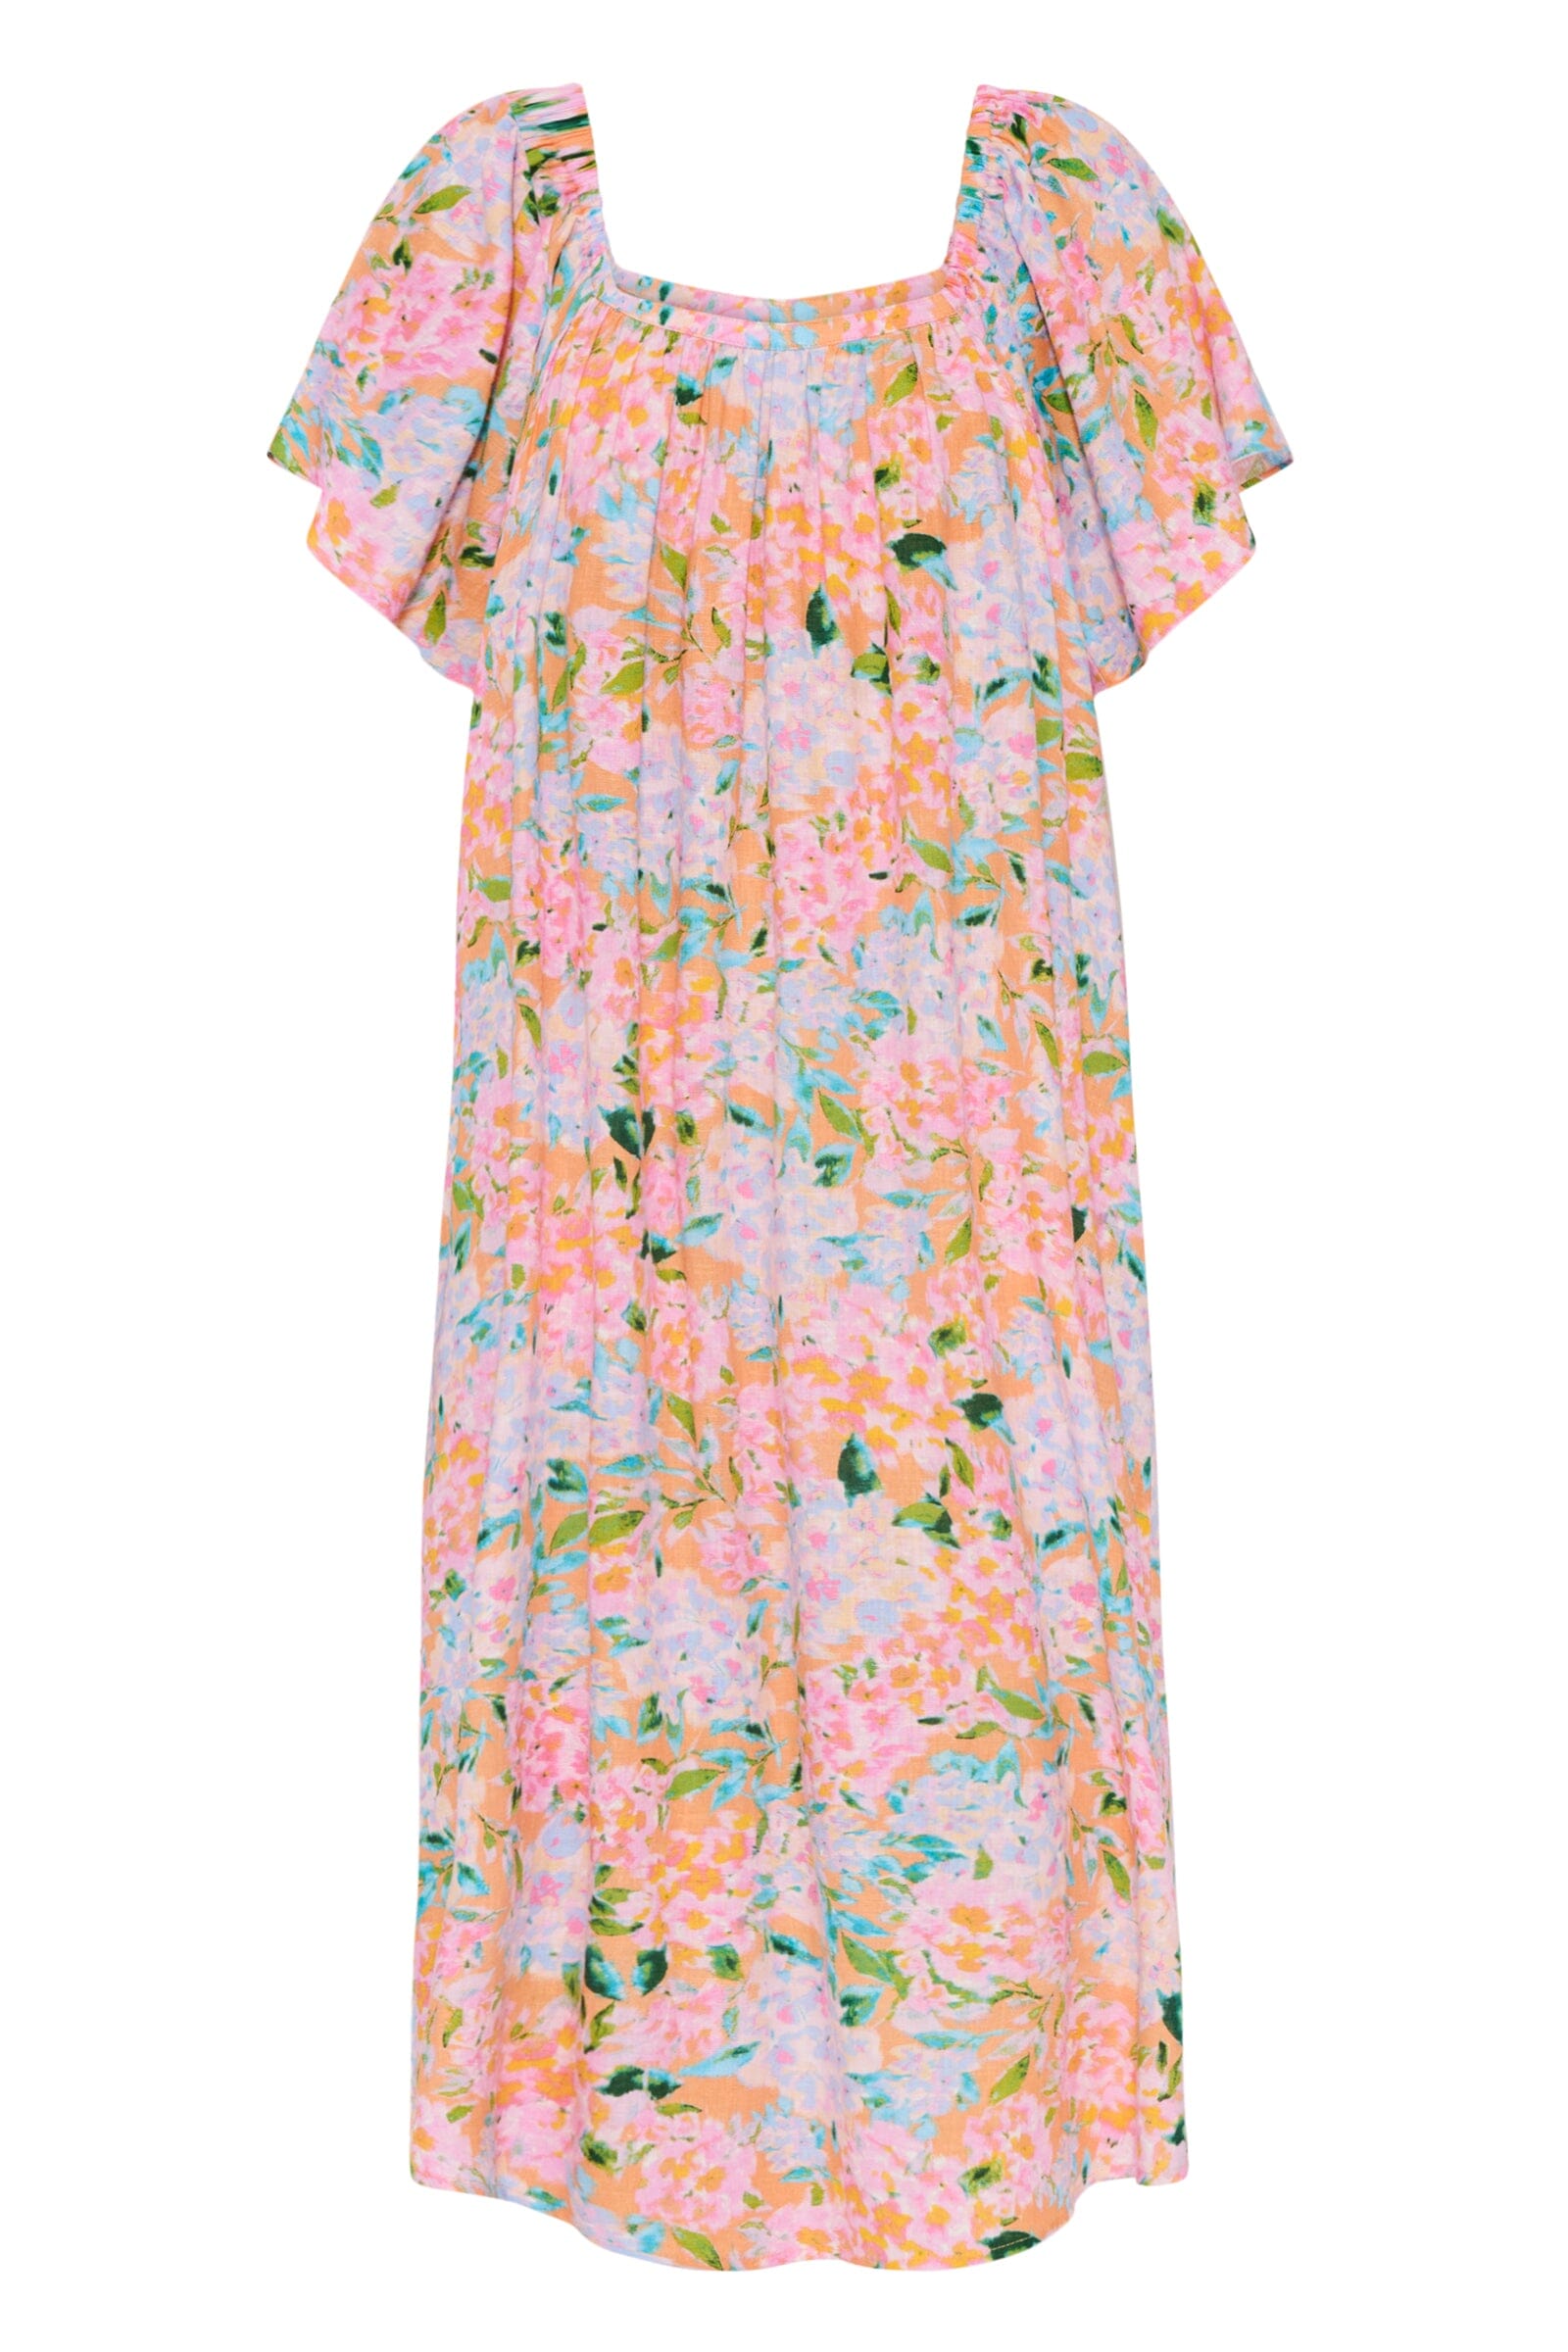 Isle of Mine - Flora Dress - Sunset Hydrangea Womens isleOFmine